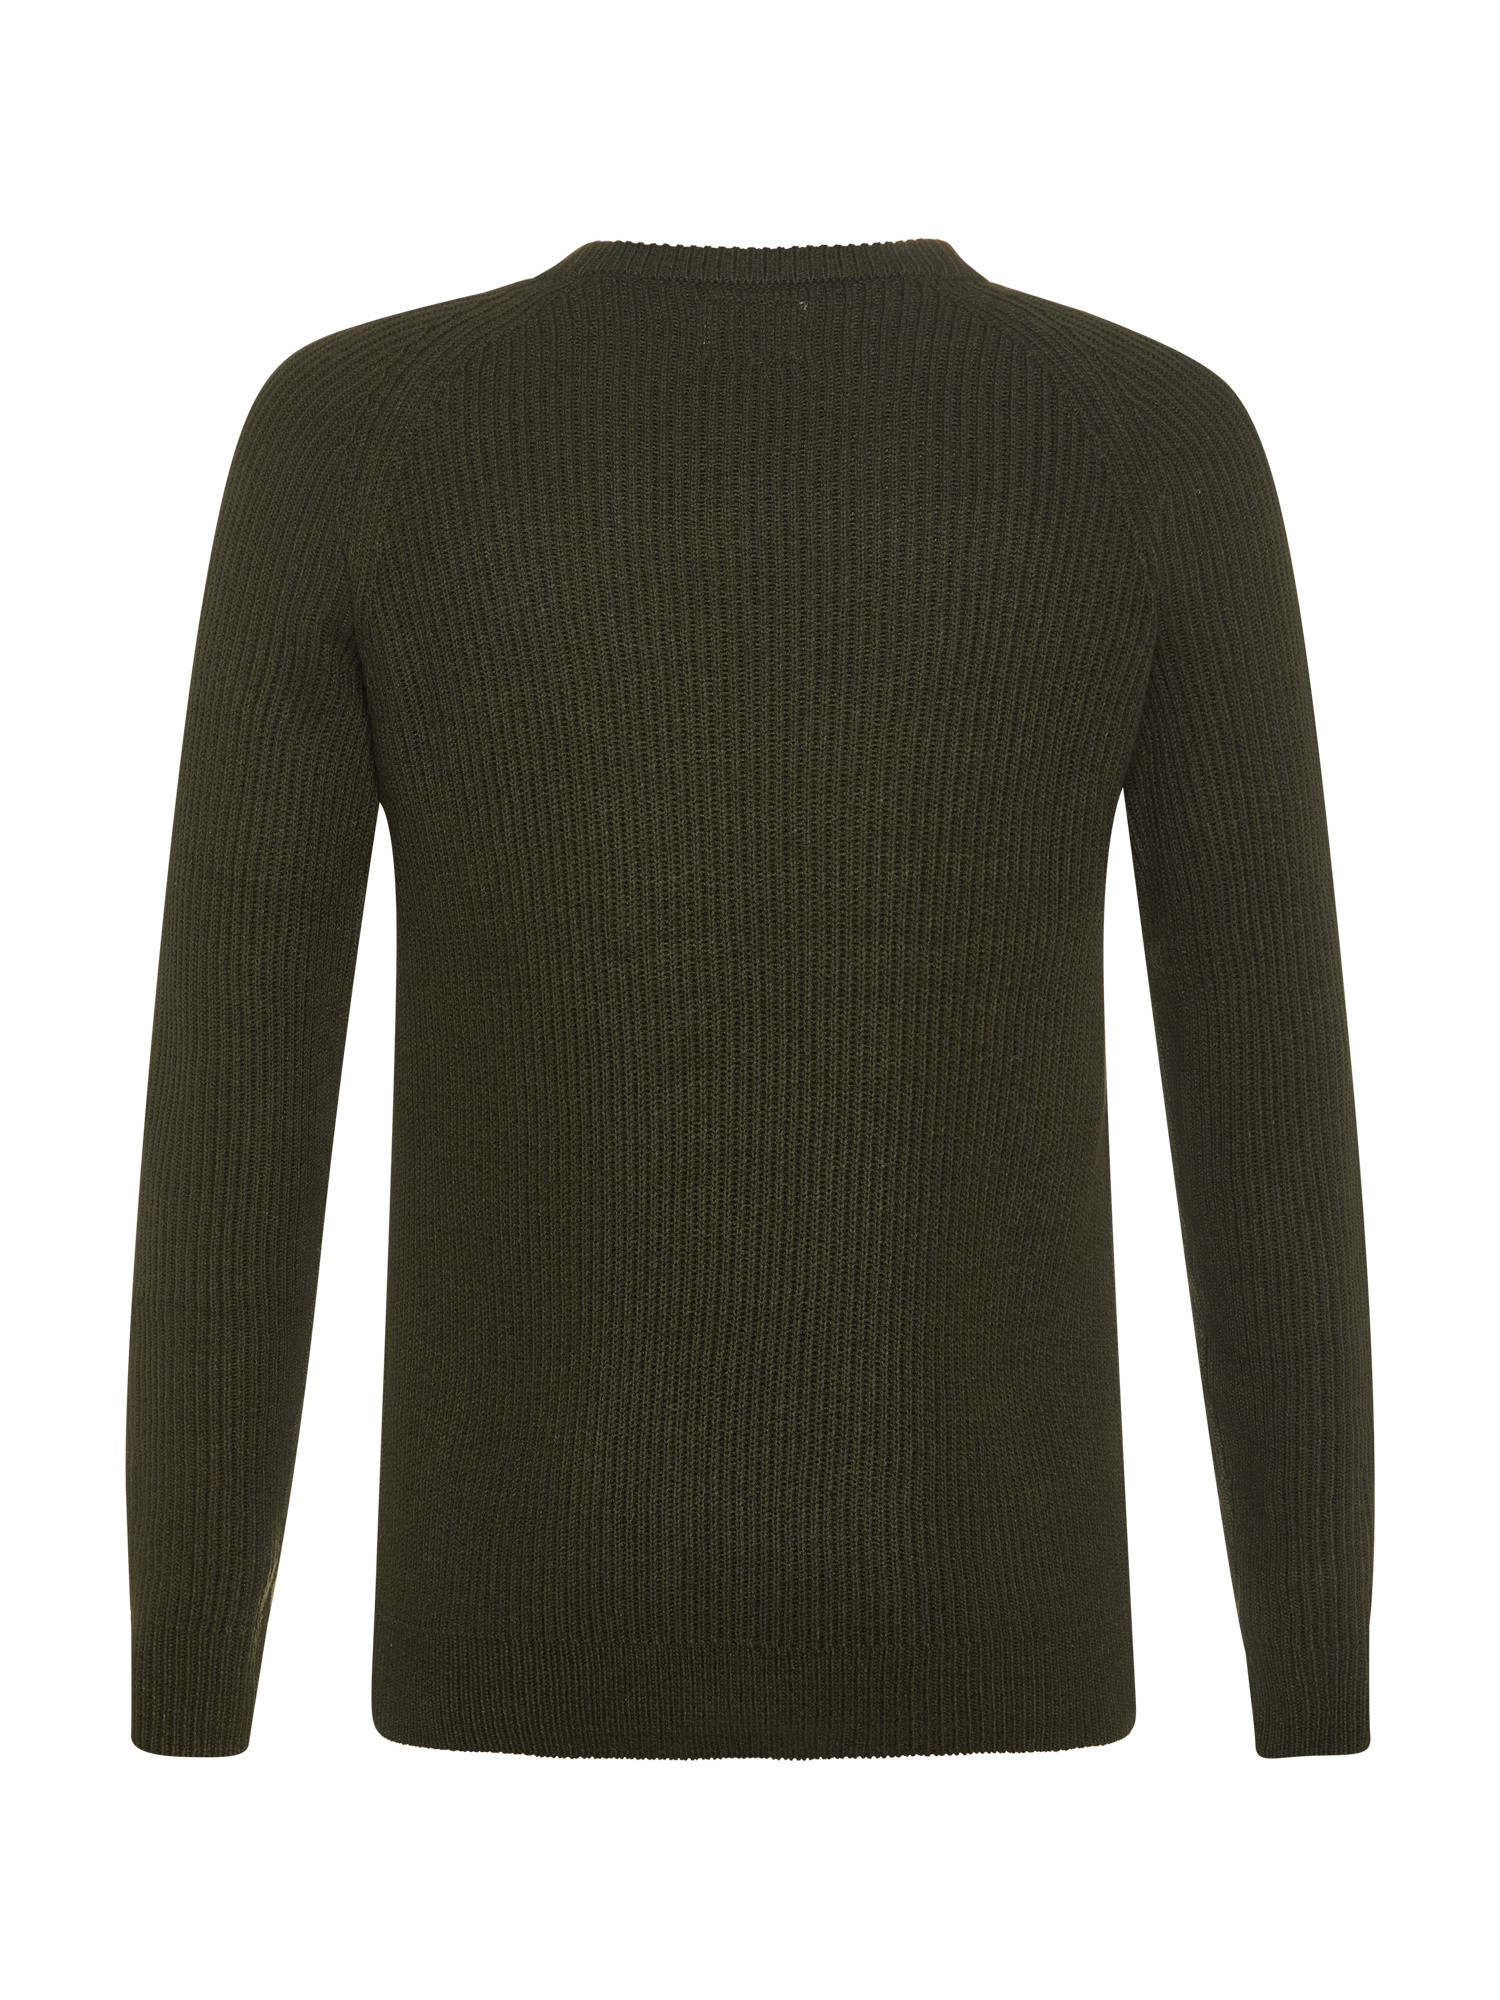 Jack & Jones Ribbed Knitted Sweater, Dark Green, large image number 1